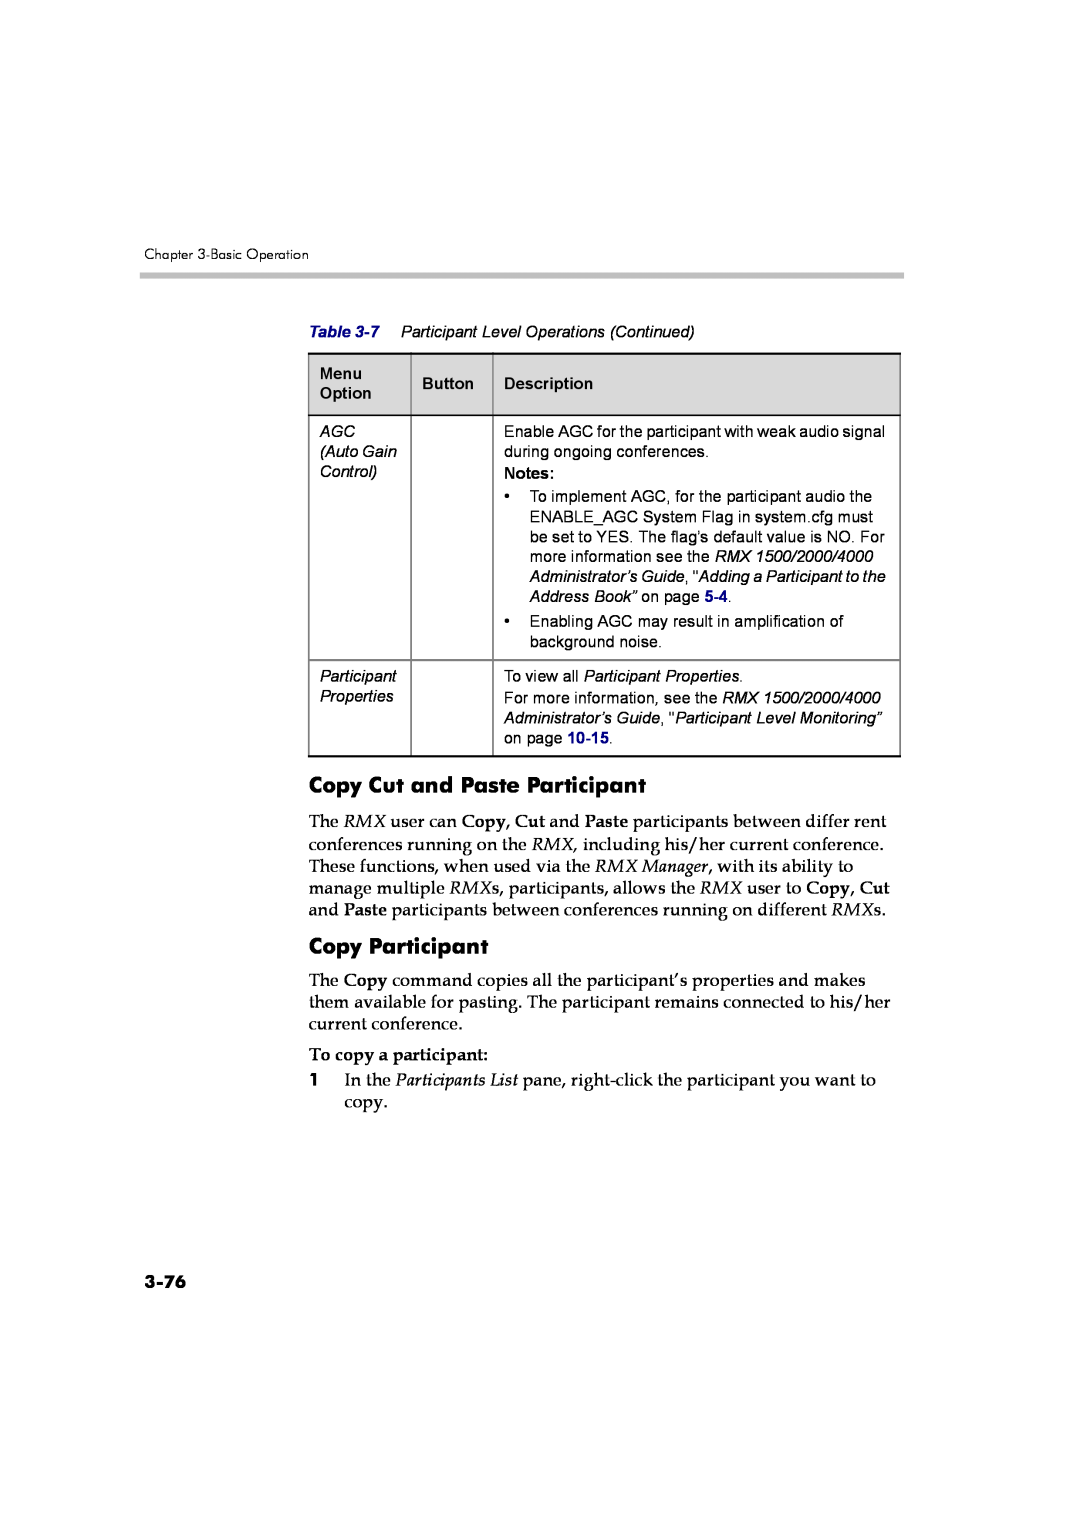 Polycom DOC2560B manual Copy Cut and Paste Participant, Copy Participant, To copy a participant, 3-76 